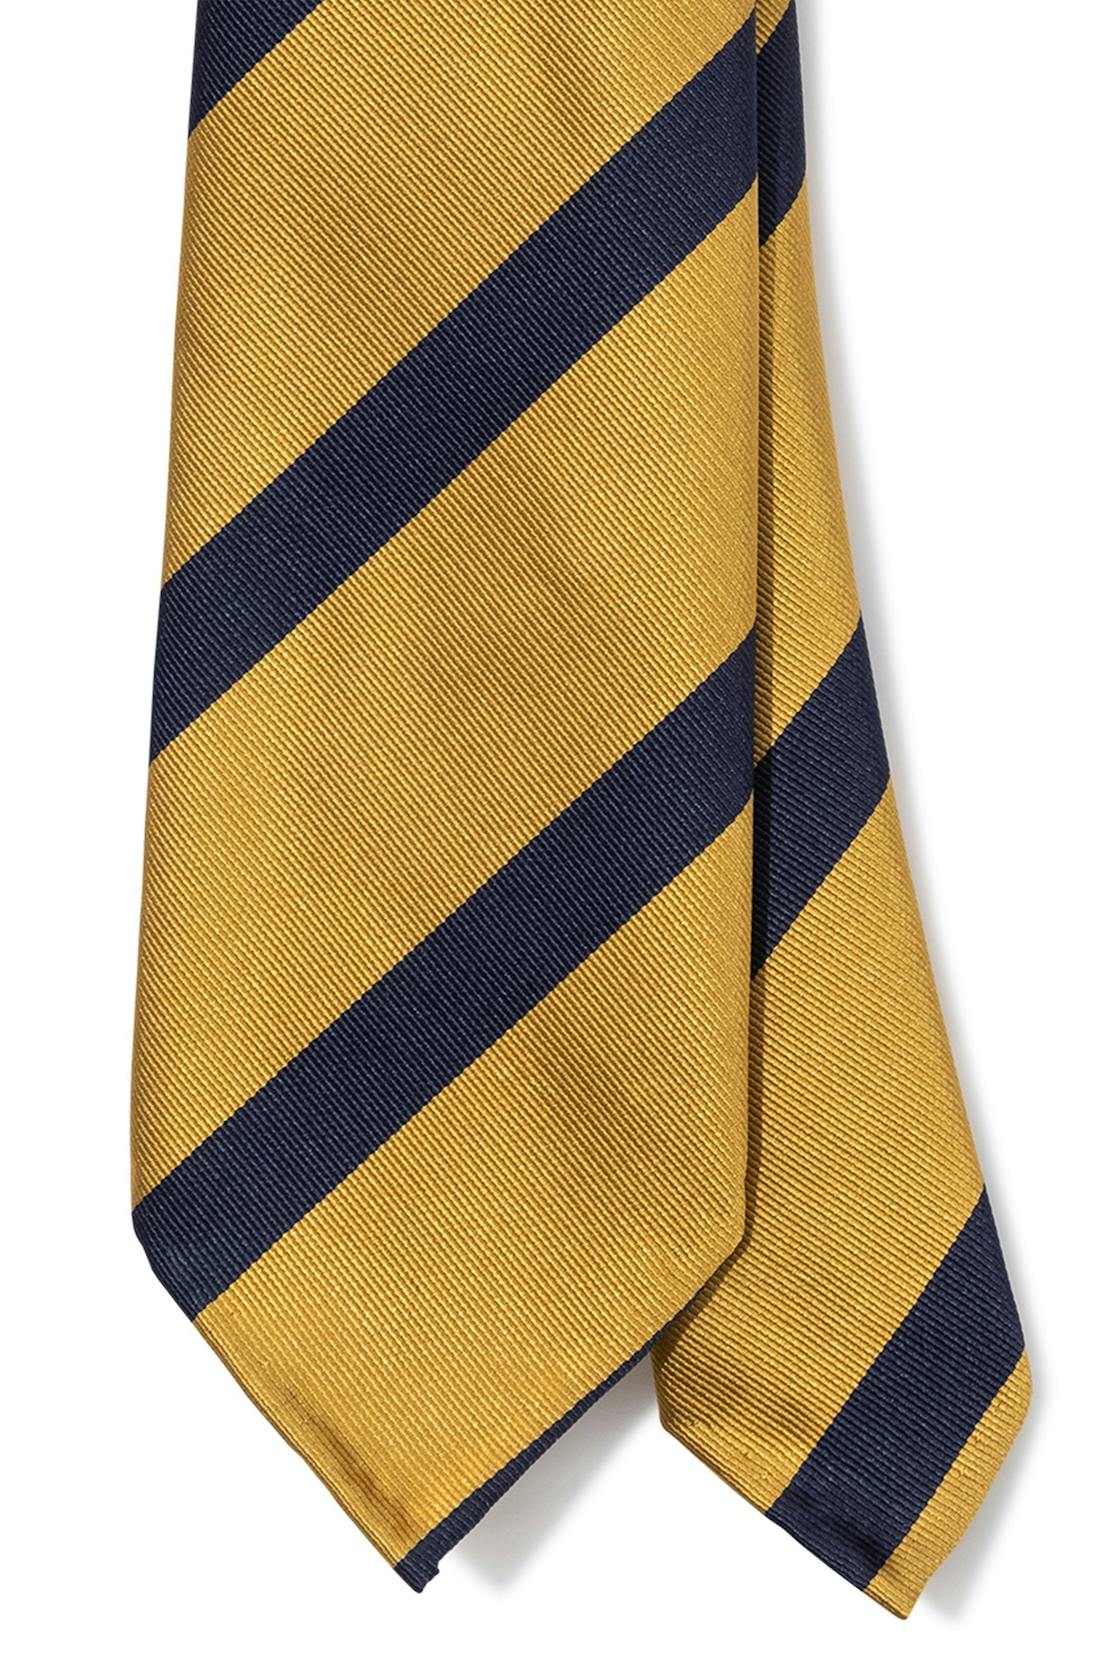 Seven Fold 30303 Gold with Navy Stripe Silk Seven-fold Tie